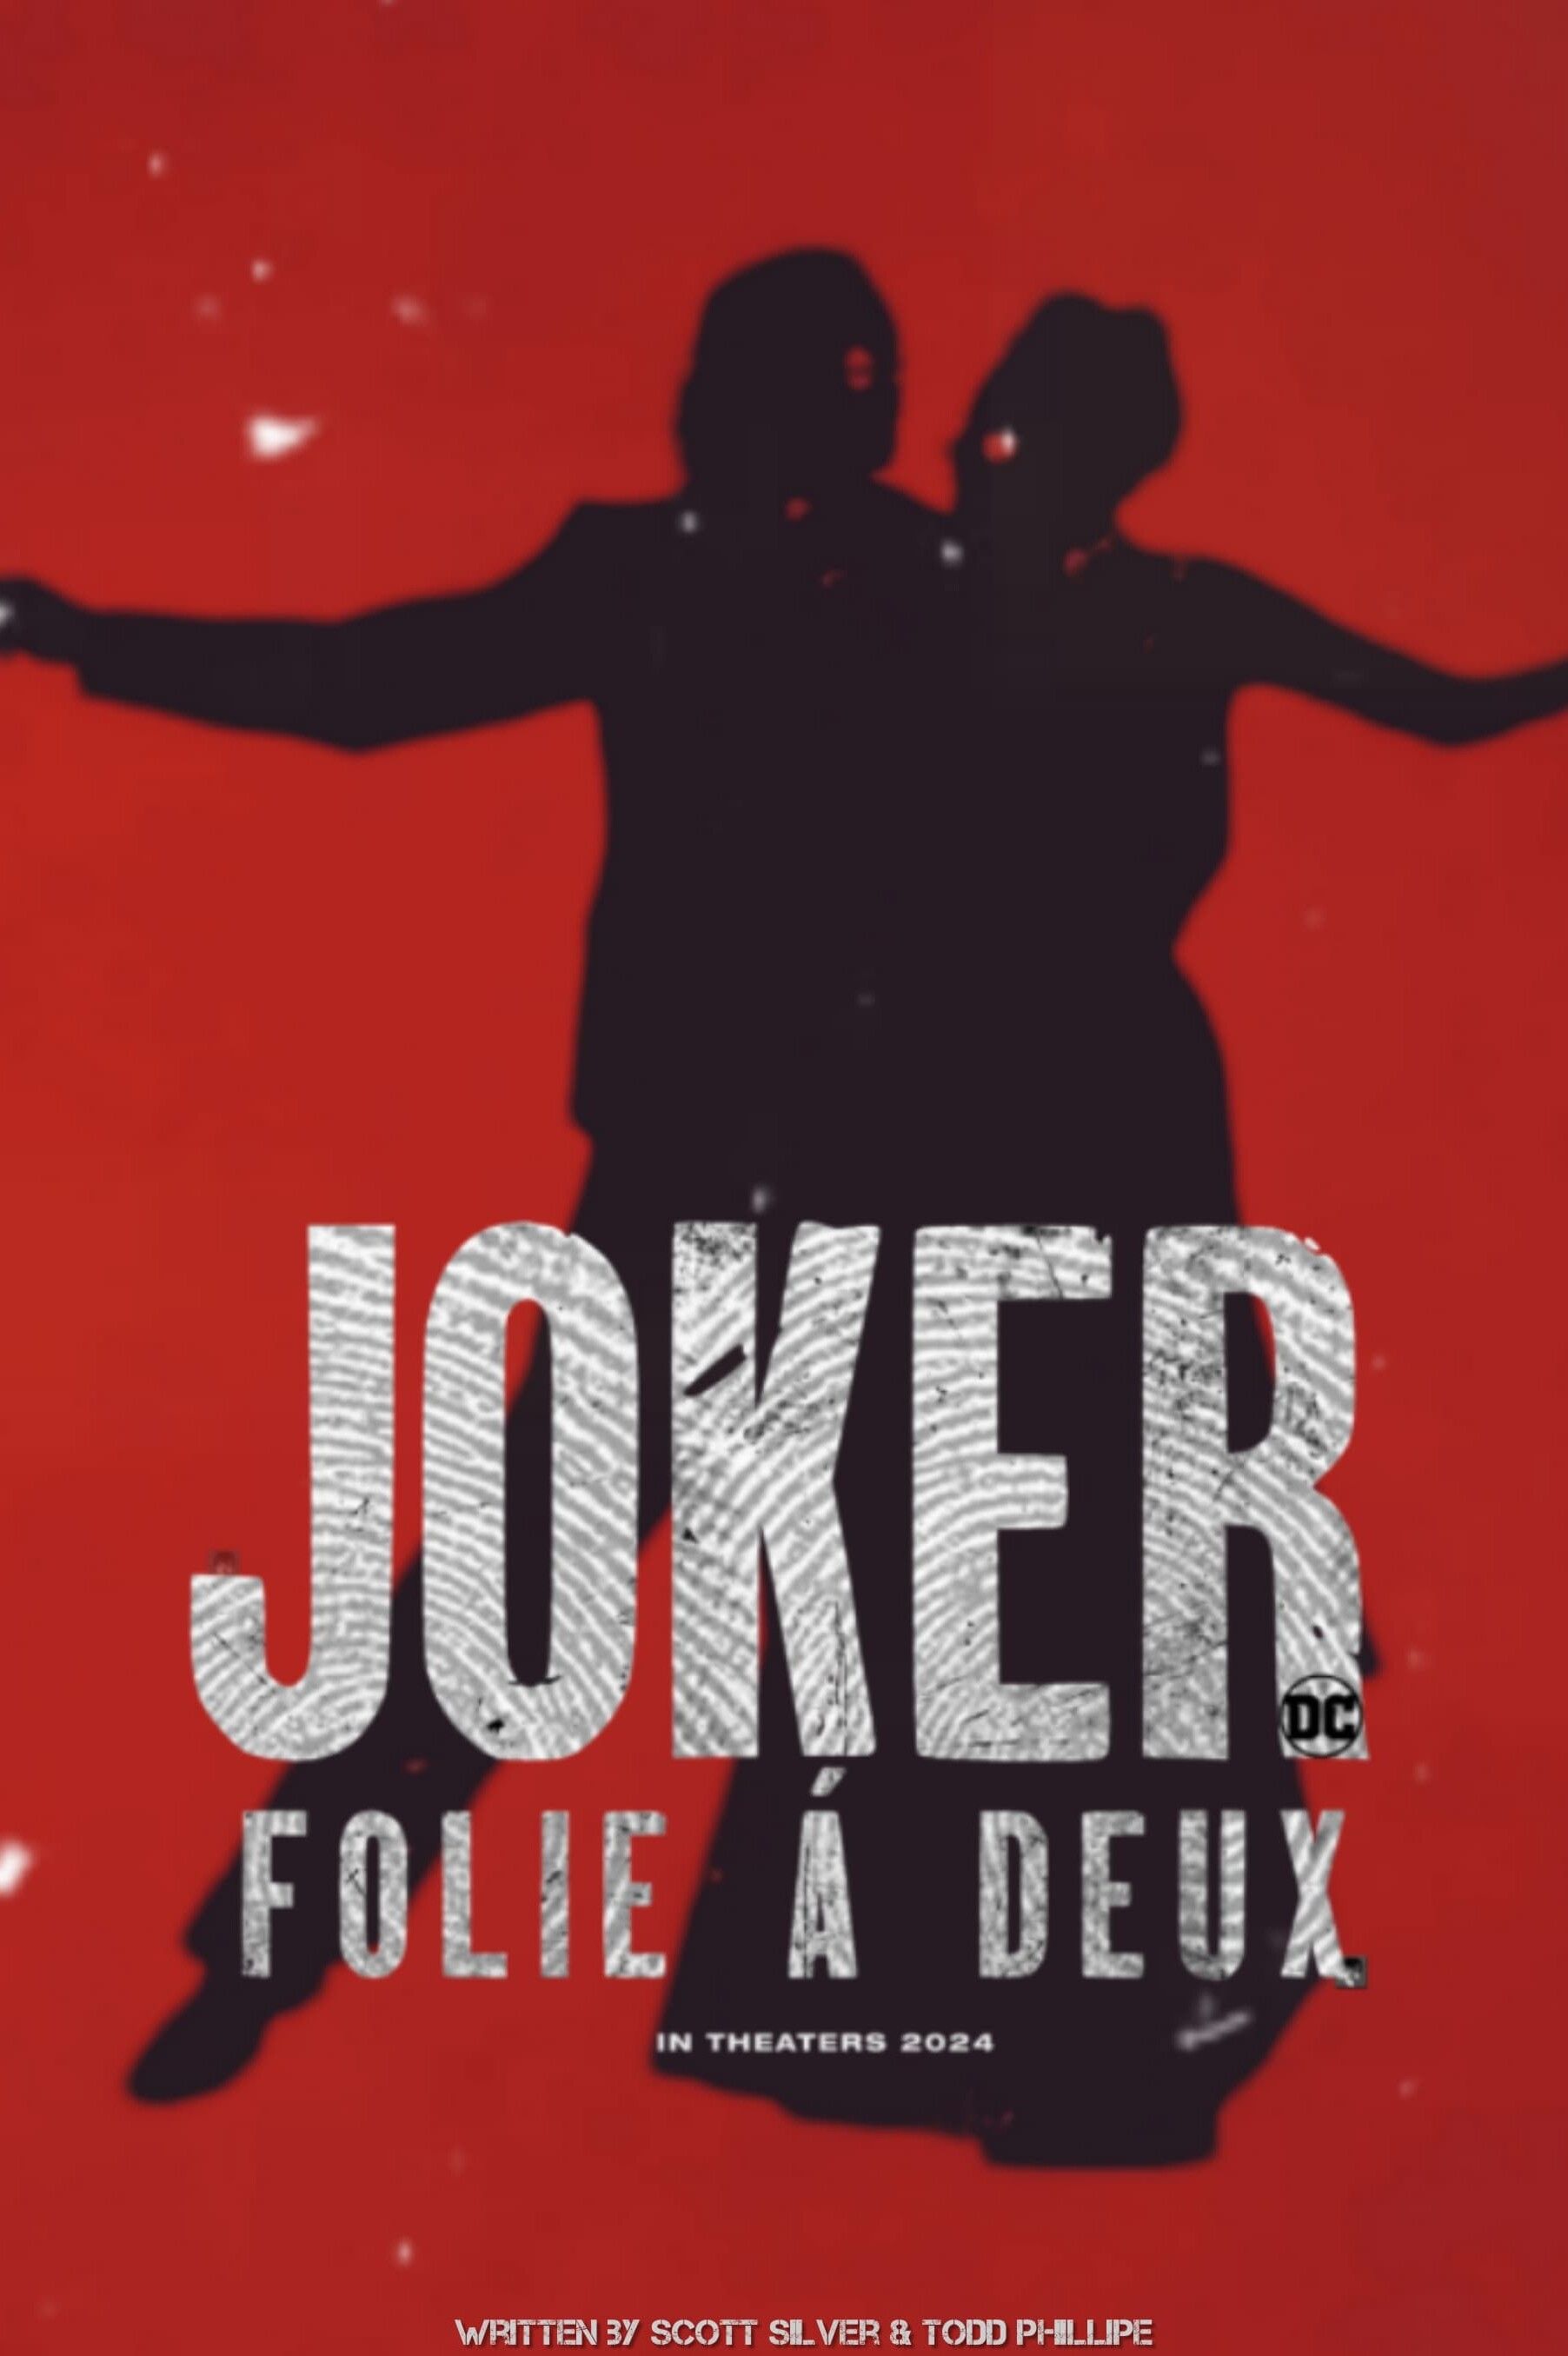 Joker 2 Folie à Deux (2024) Movie Information & Trailers KinoCheck